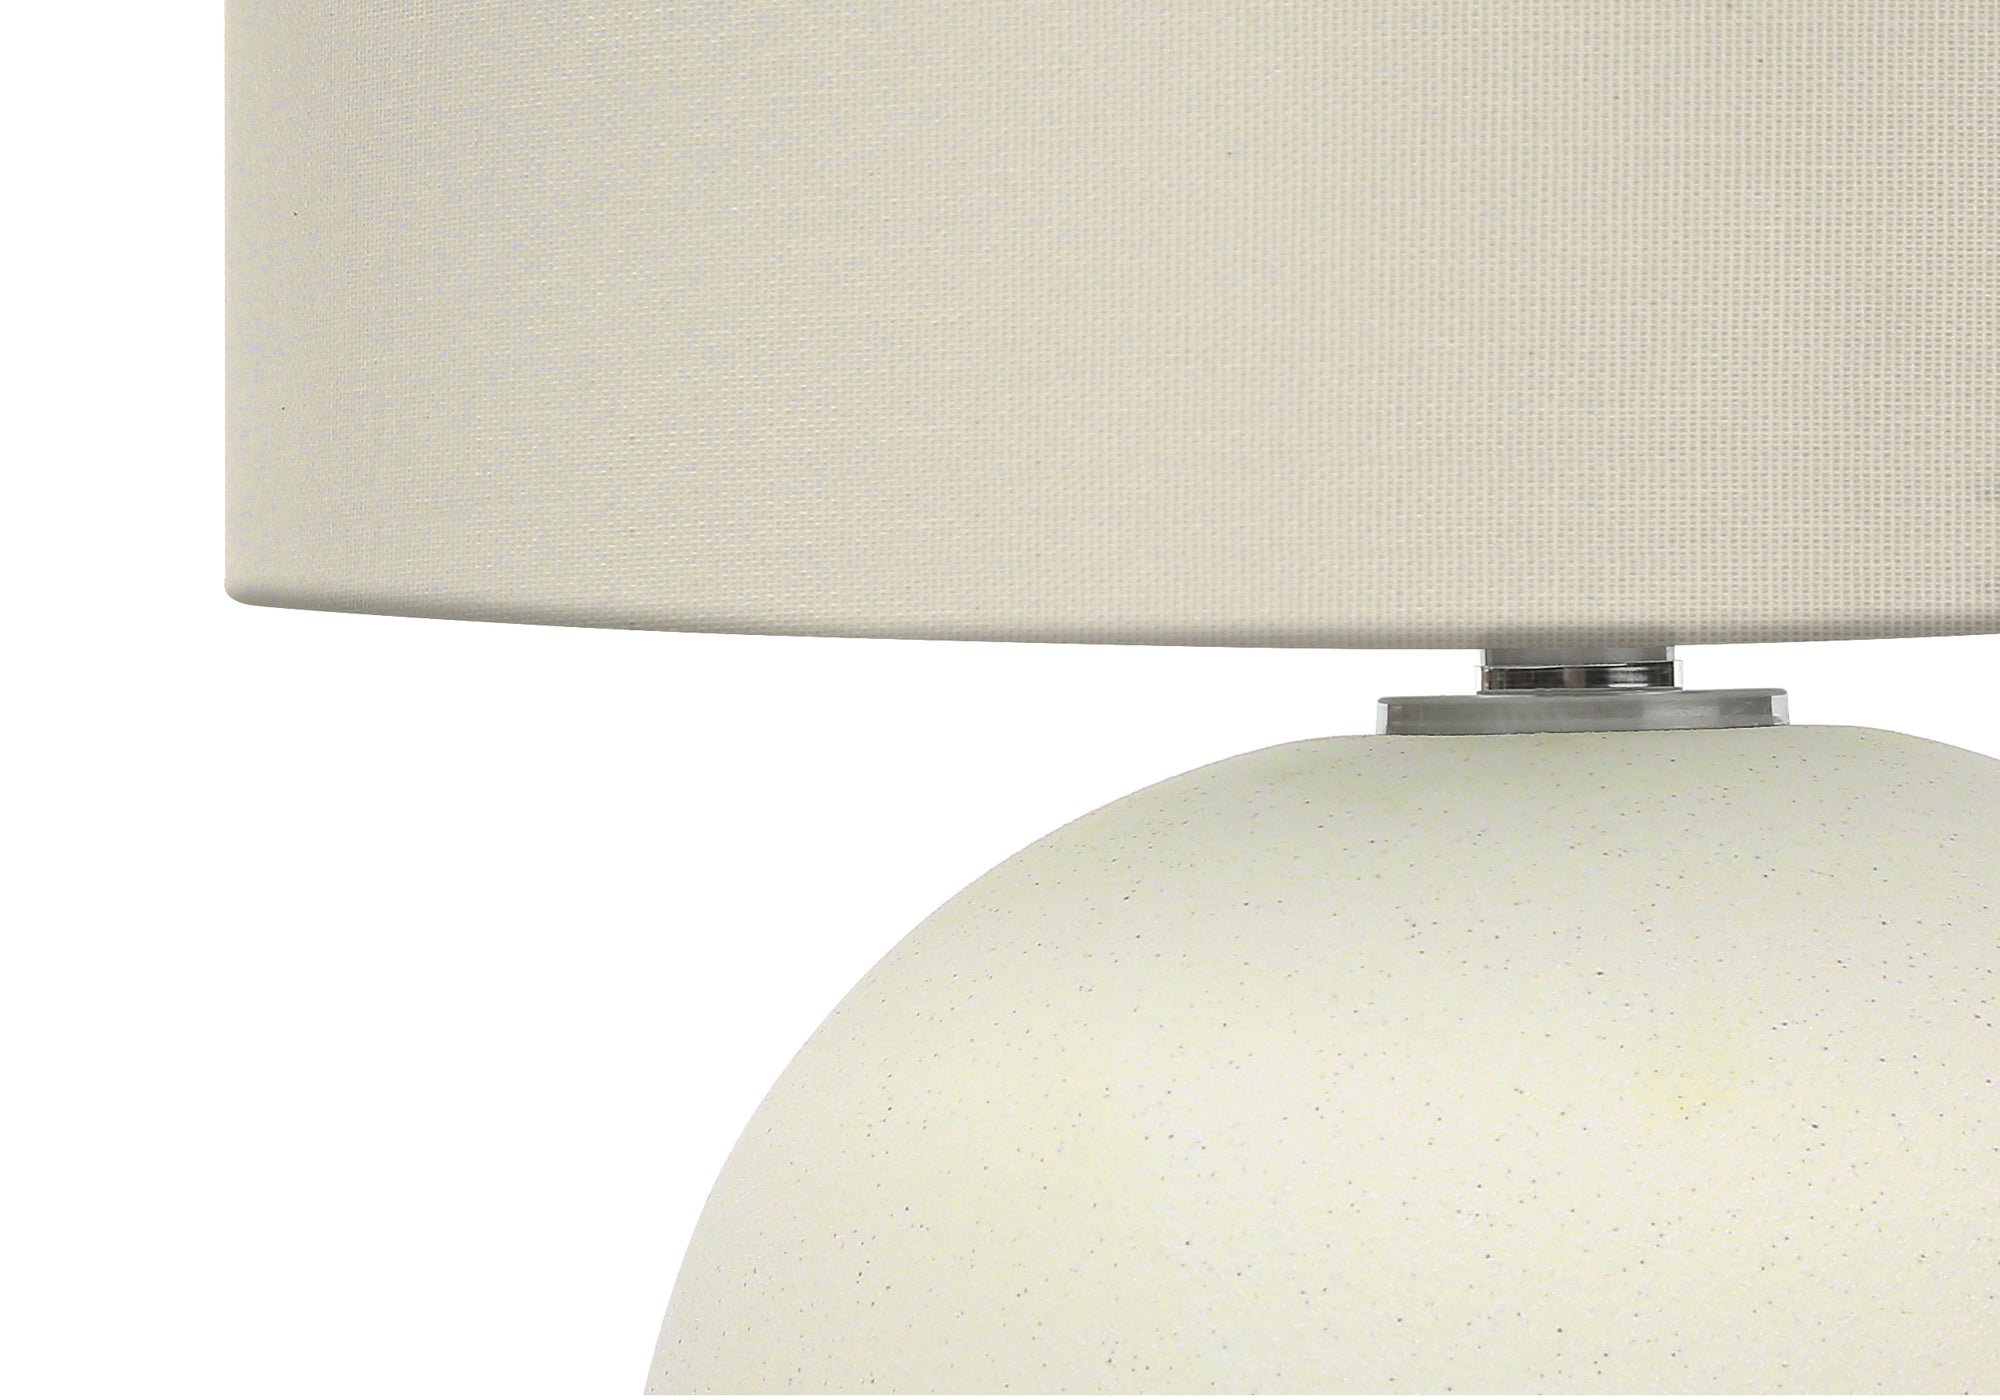 MN-129630    Lighting, 18"H, Table Lamp, Ivory / Cream Shade, Cream Ceramic, Contemporary